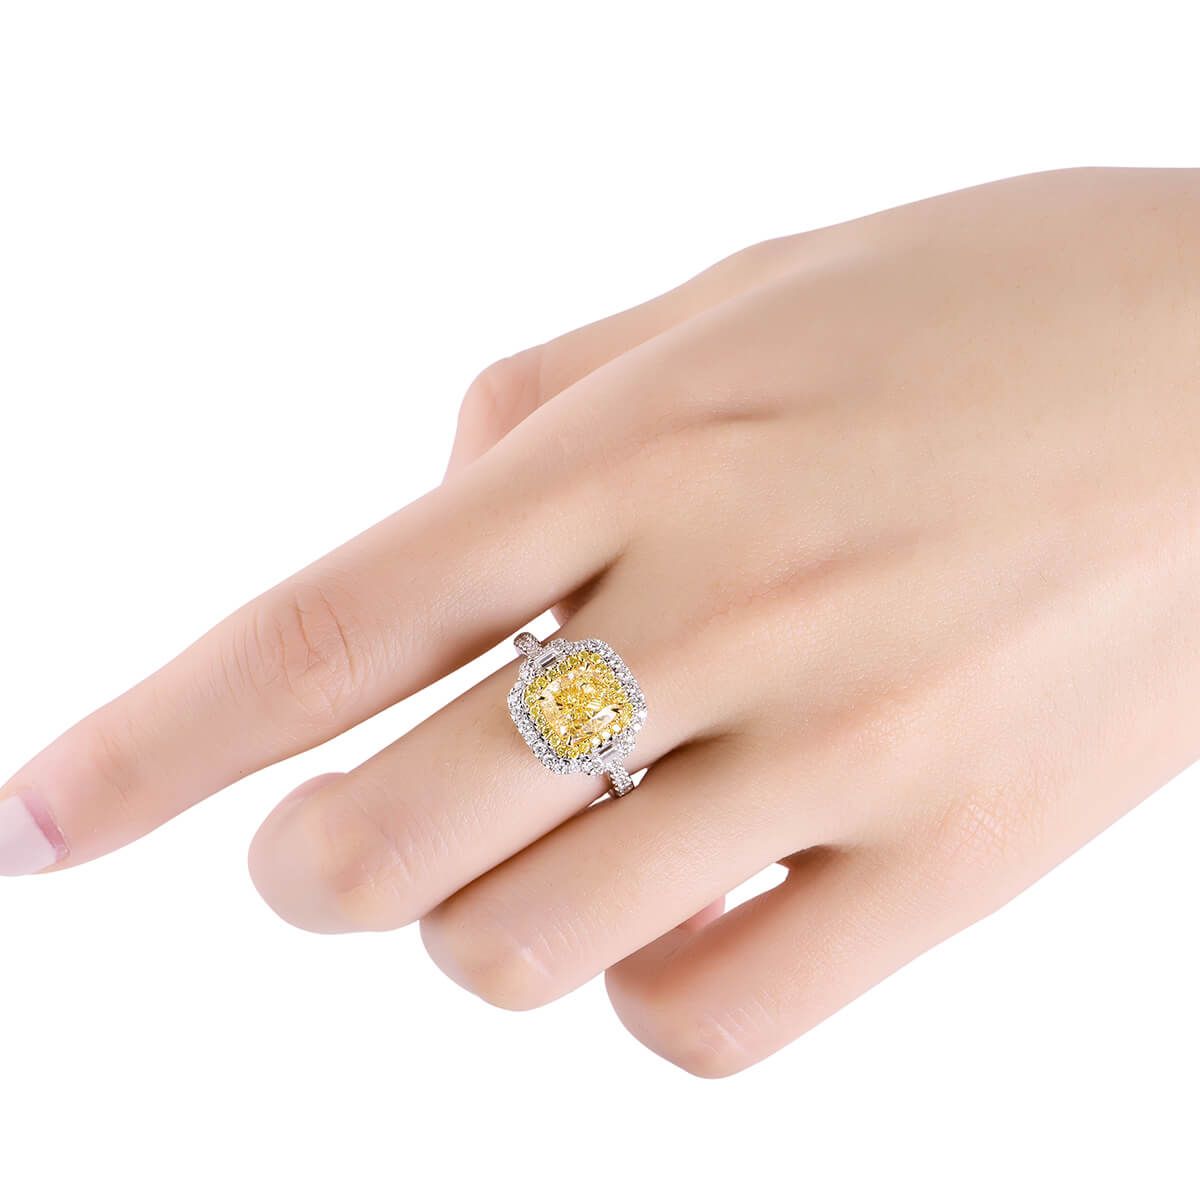 Light Yellow (W-X) Diamond Ring, 2.01 Ct. (2.75 Ct. TW), Cushion shape, GIA Certified, 2195158610